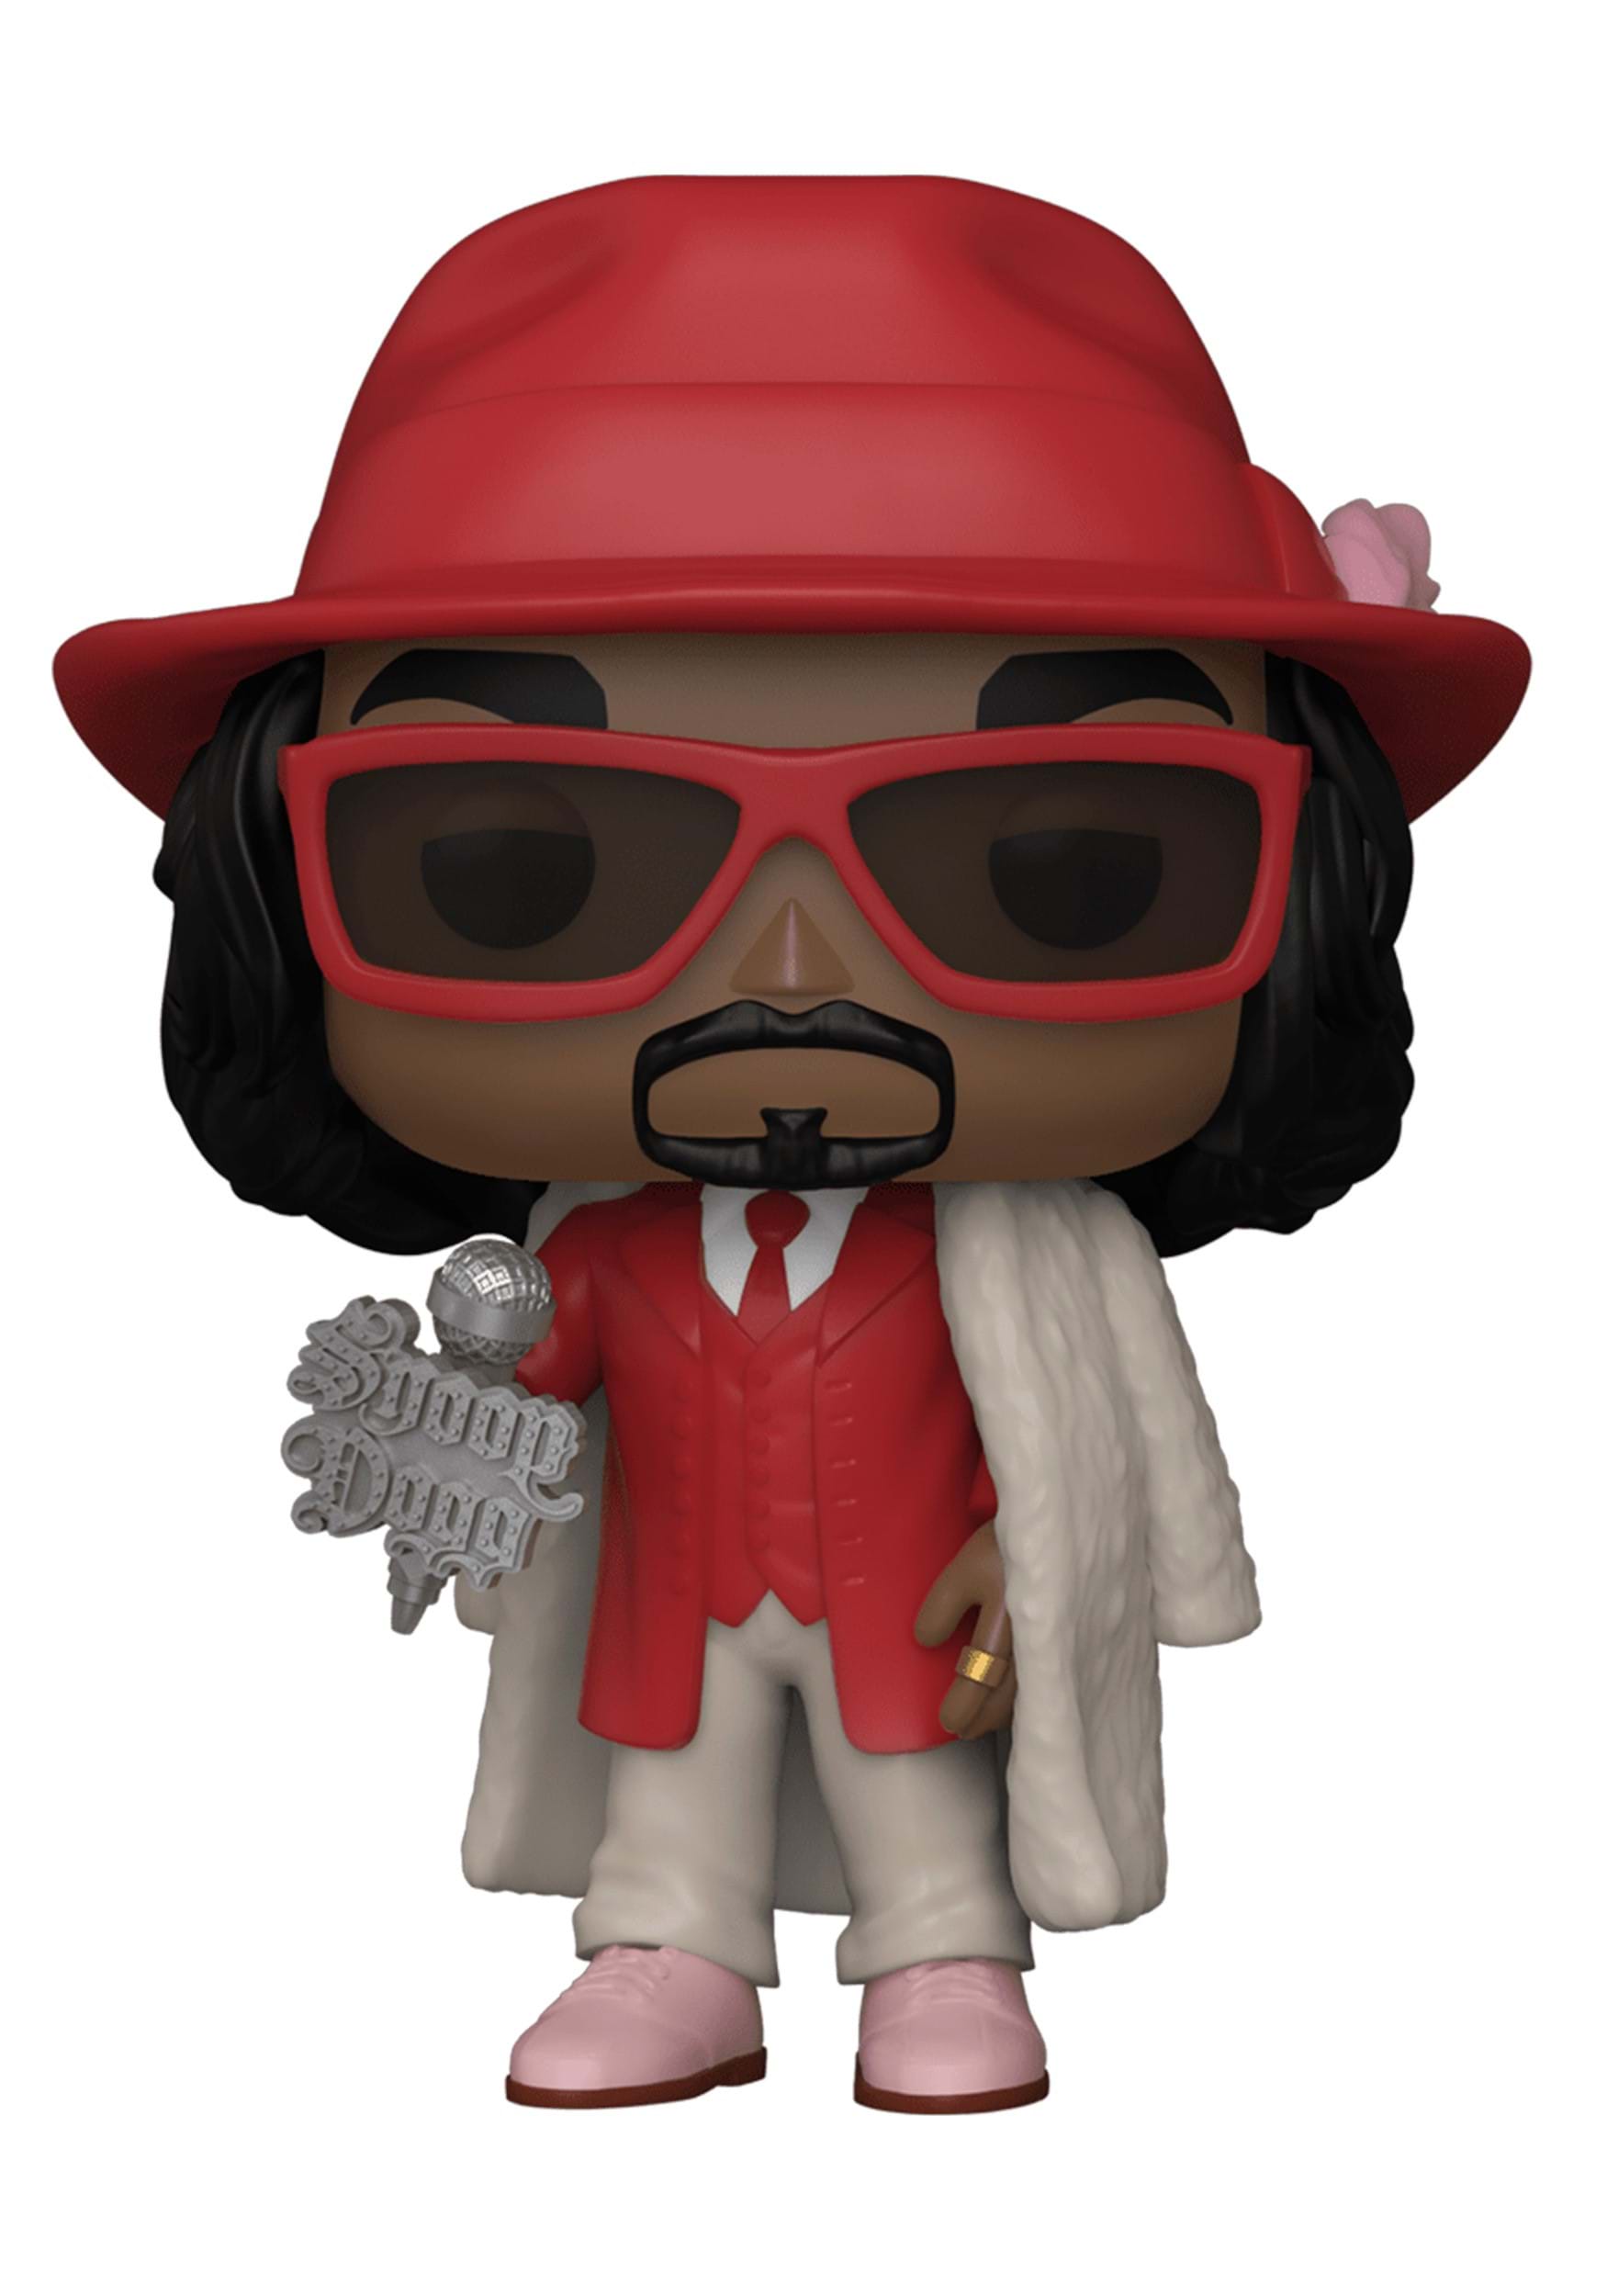 Funko POP! Rocks: Snoop Dogg with Fur Coat